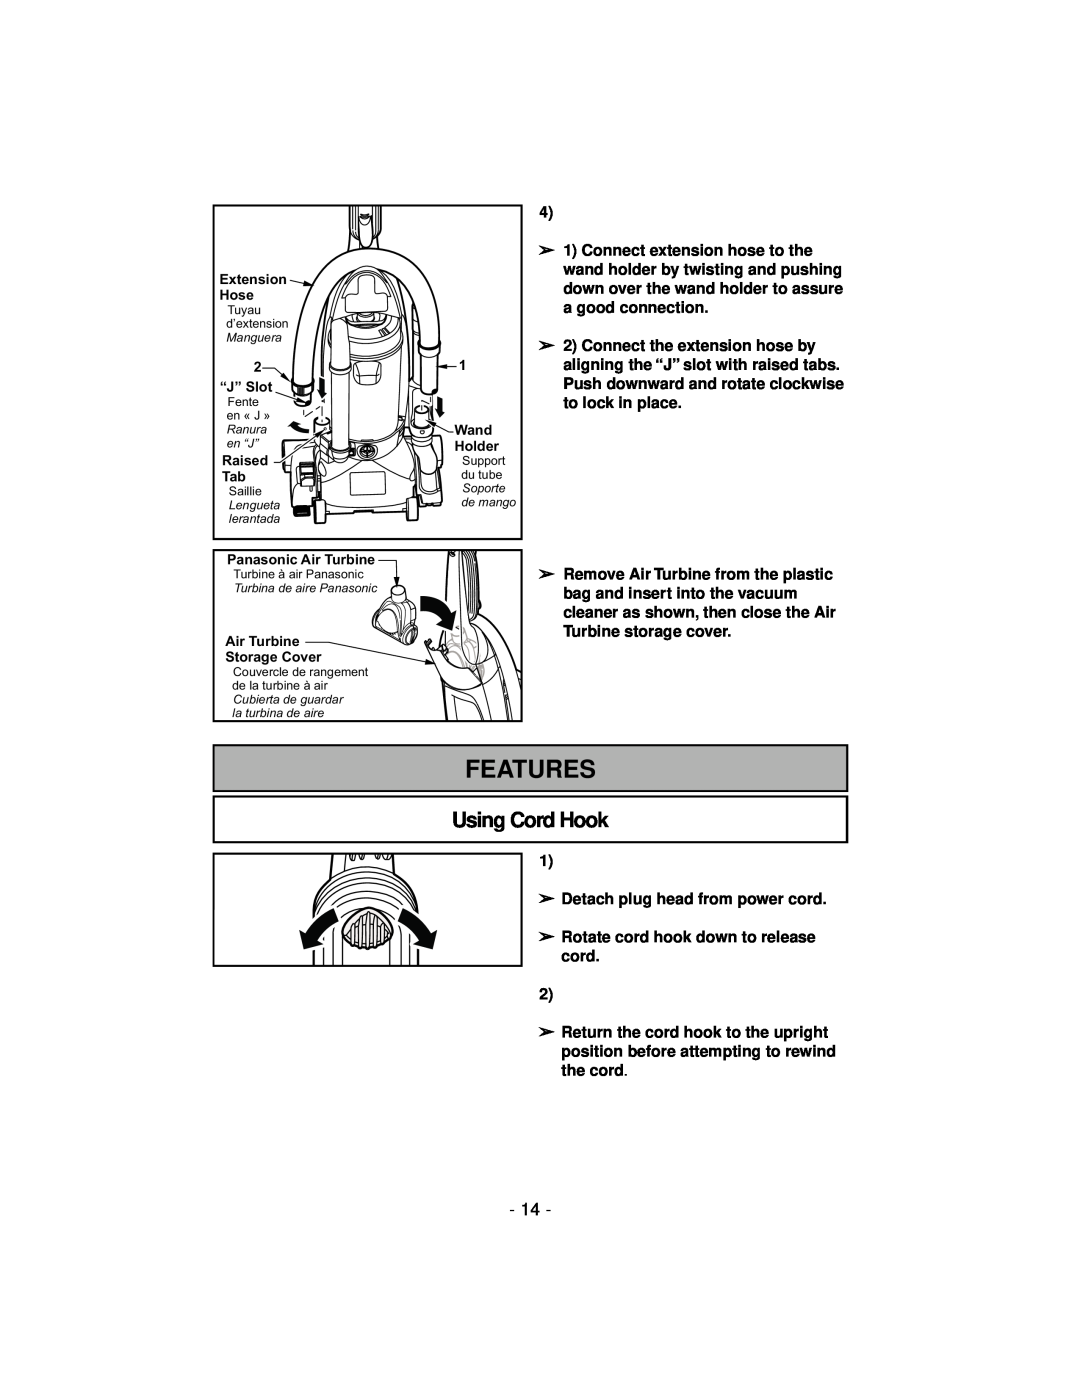 Panasonic MC-V7600 operating instructions Features, Using Cord Hook 